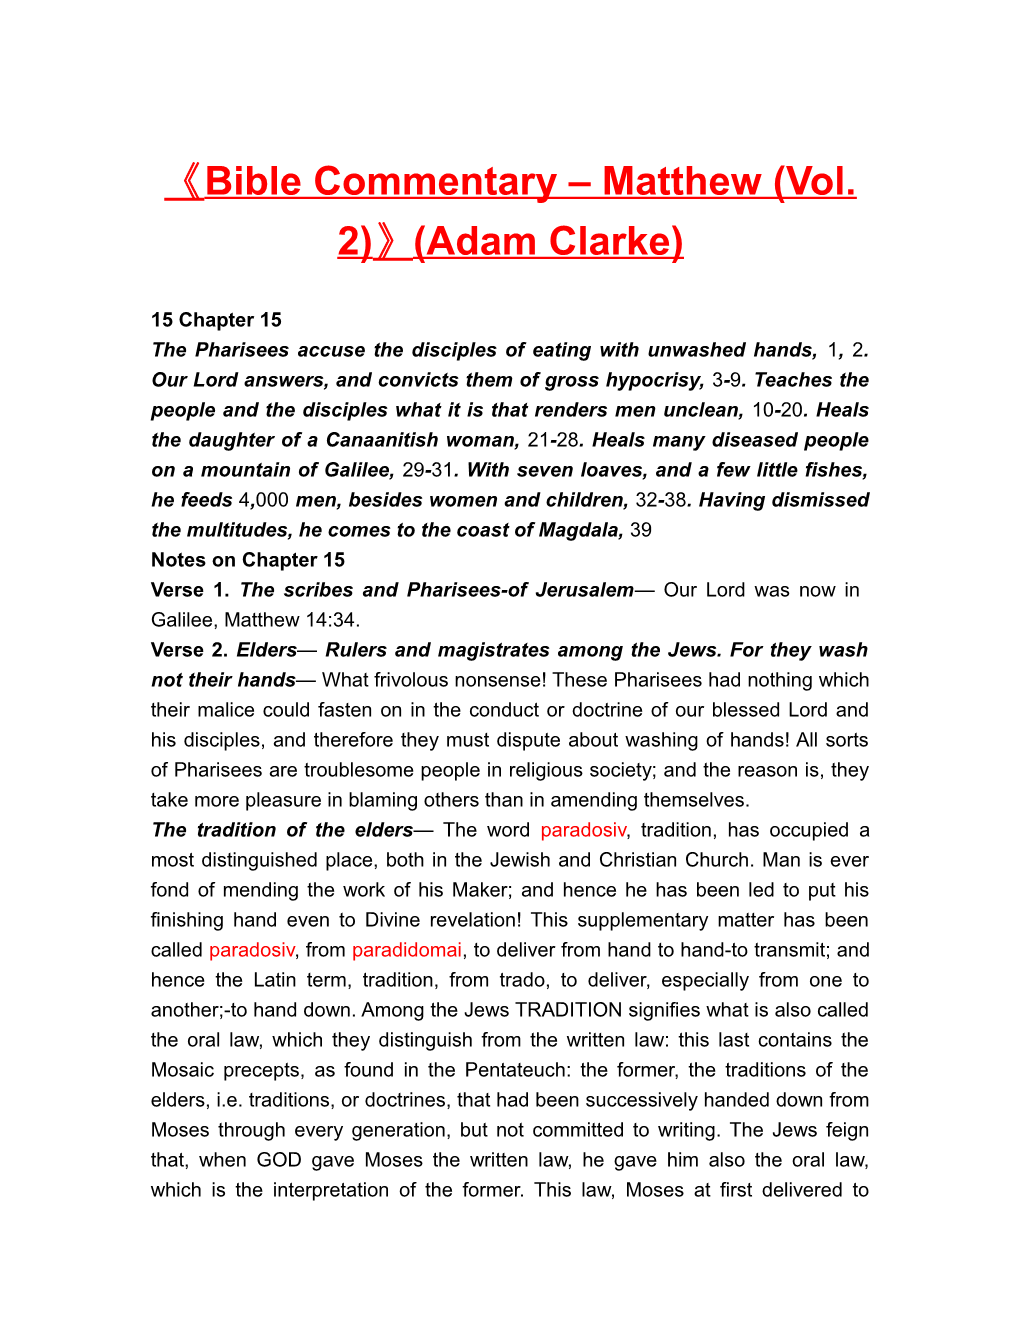 Bible Commentary Matthew (Vol. 2) (Adam Clarke)